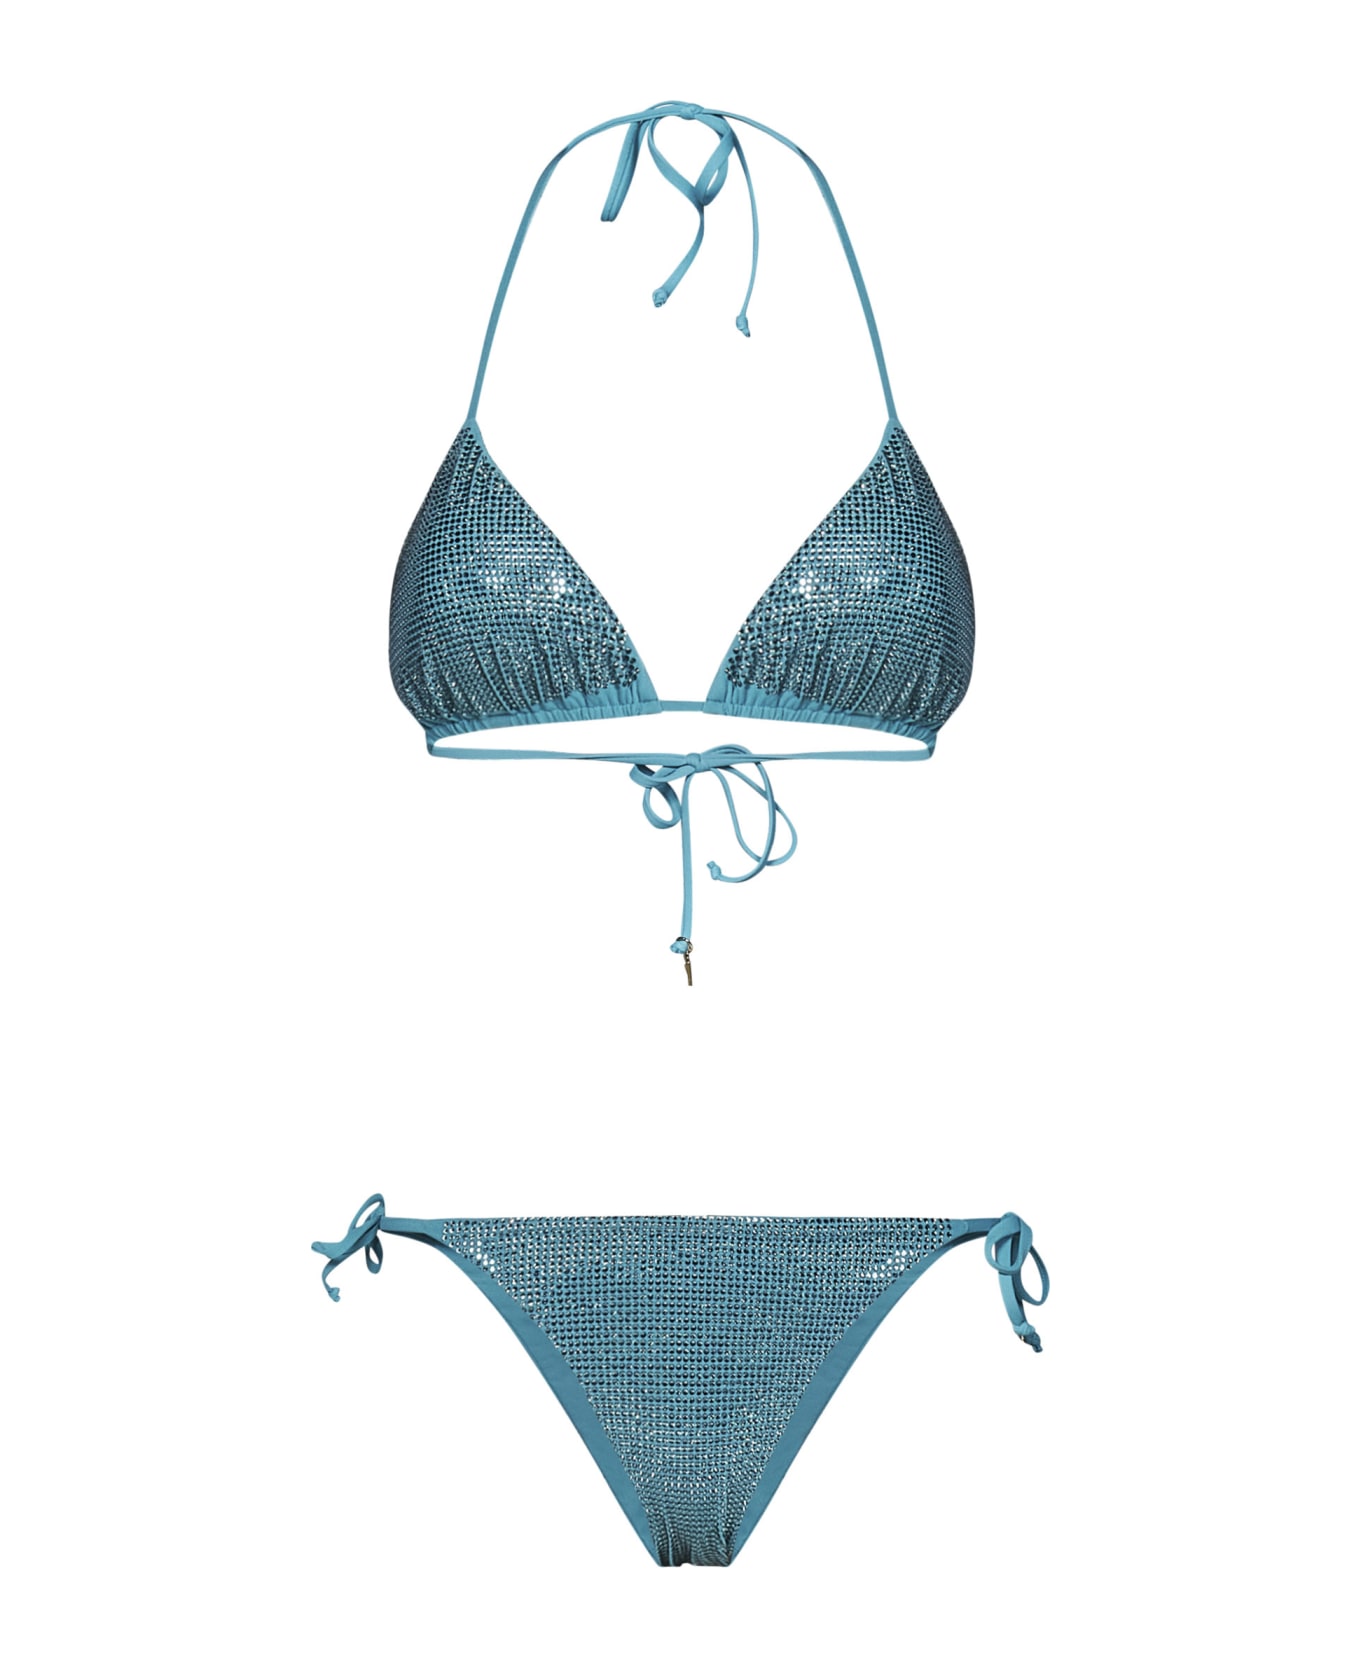 Fisico - Cristina Ferrari Fisico Bikini - Clear Blue